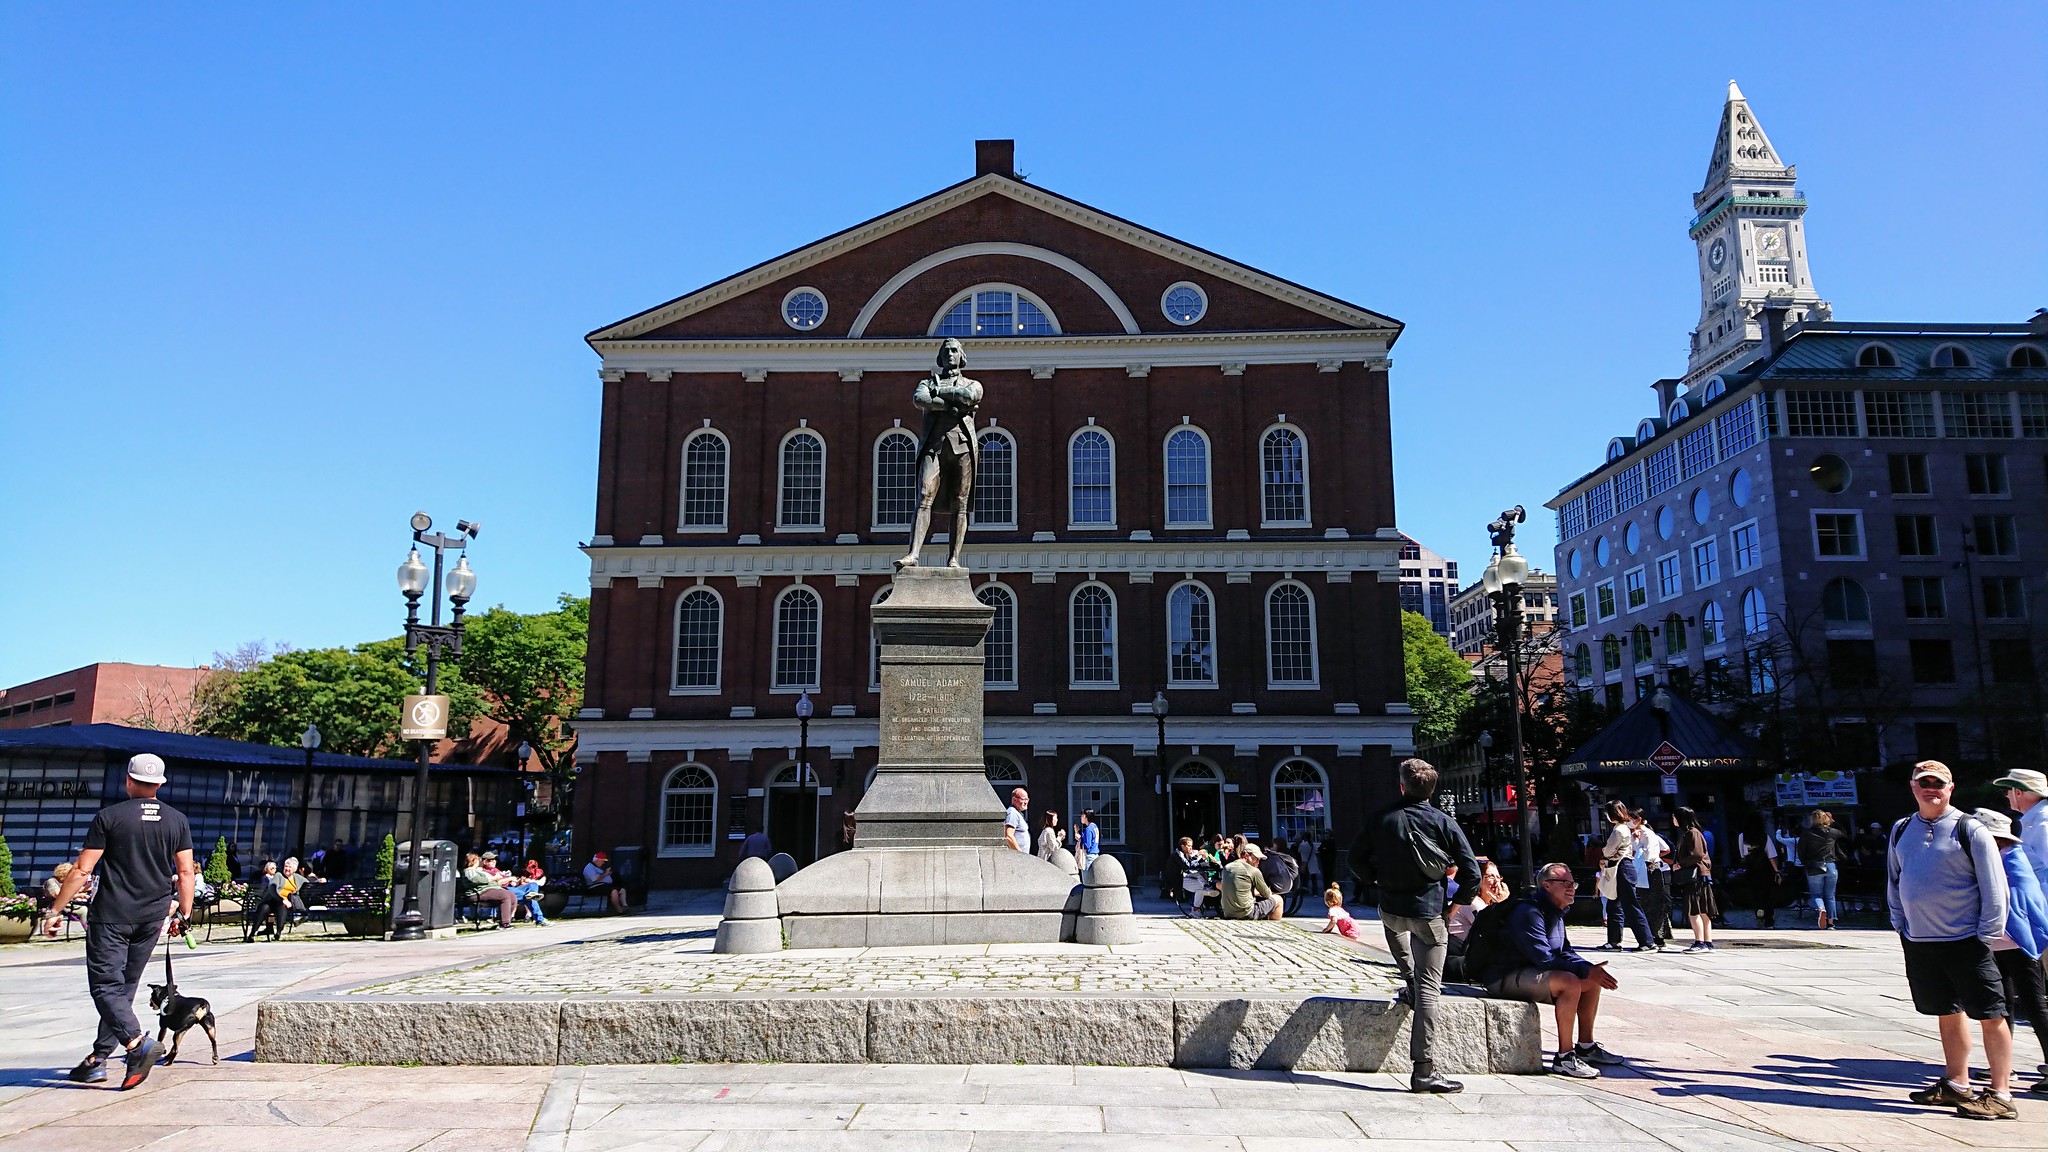 Faneuil Hall - Samuel Adams - Boston, MA